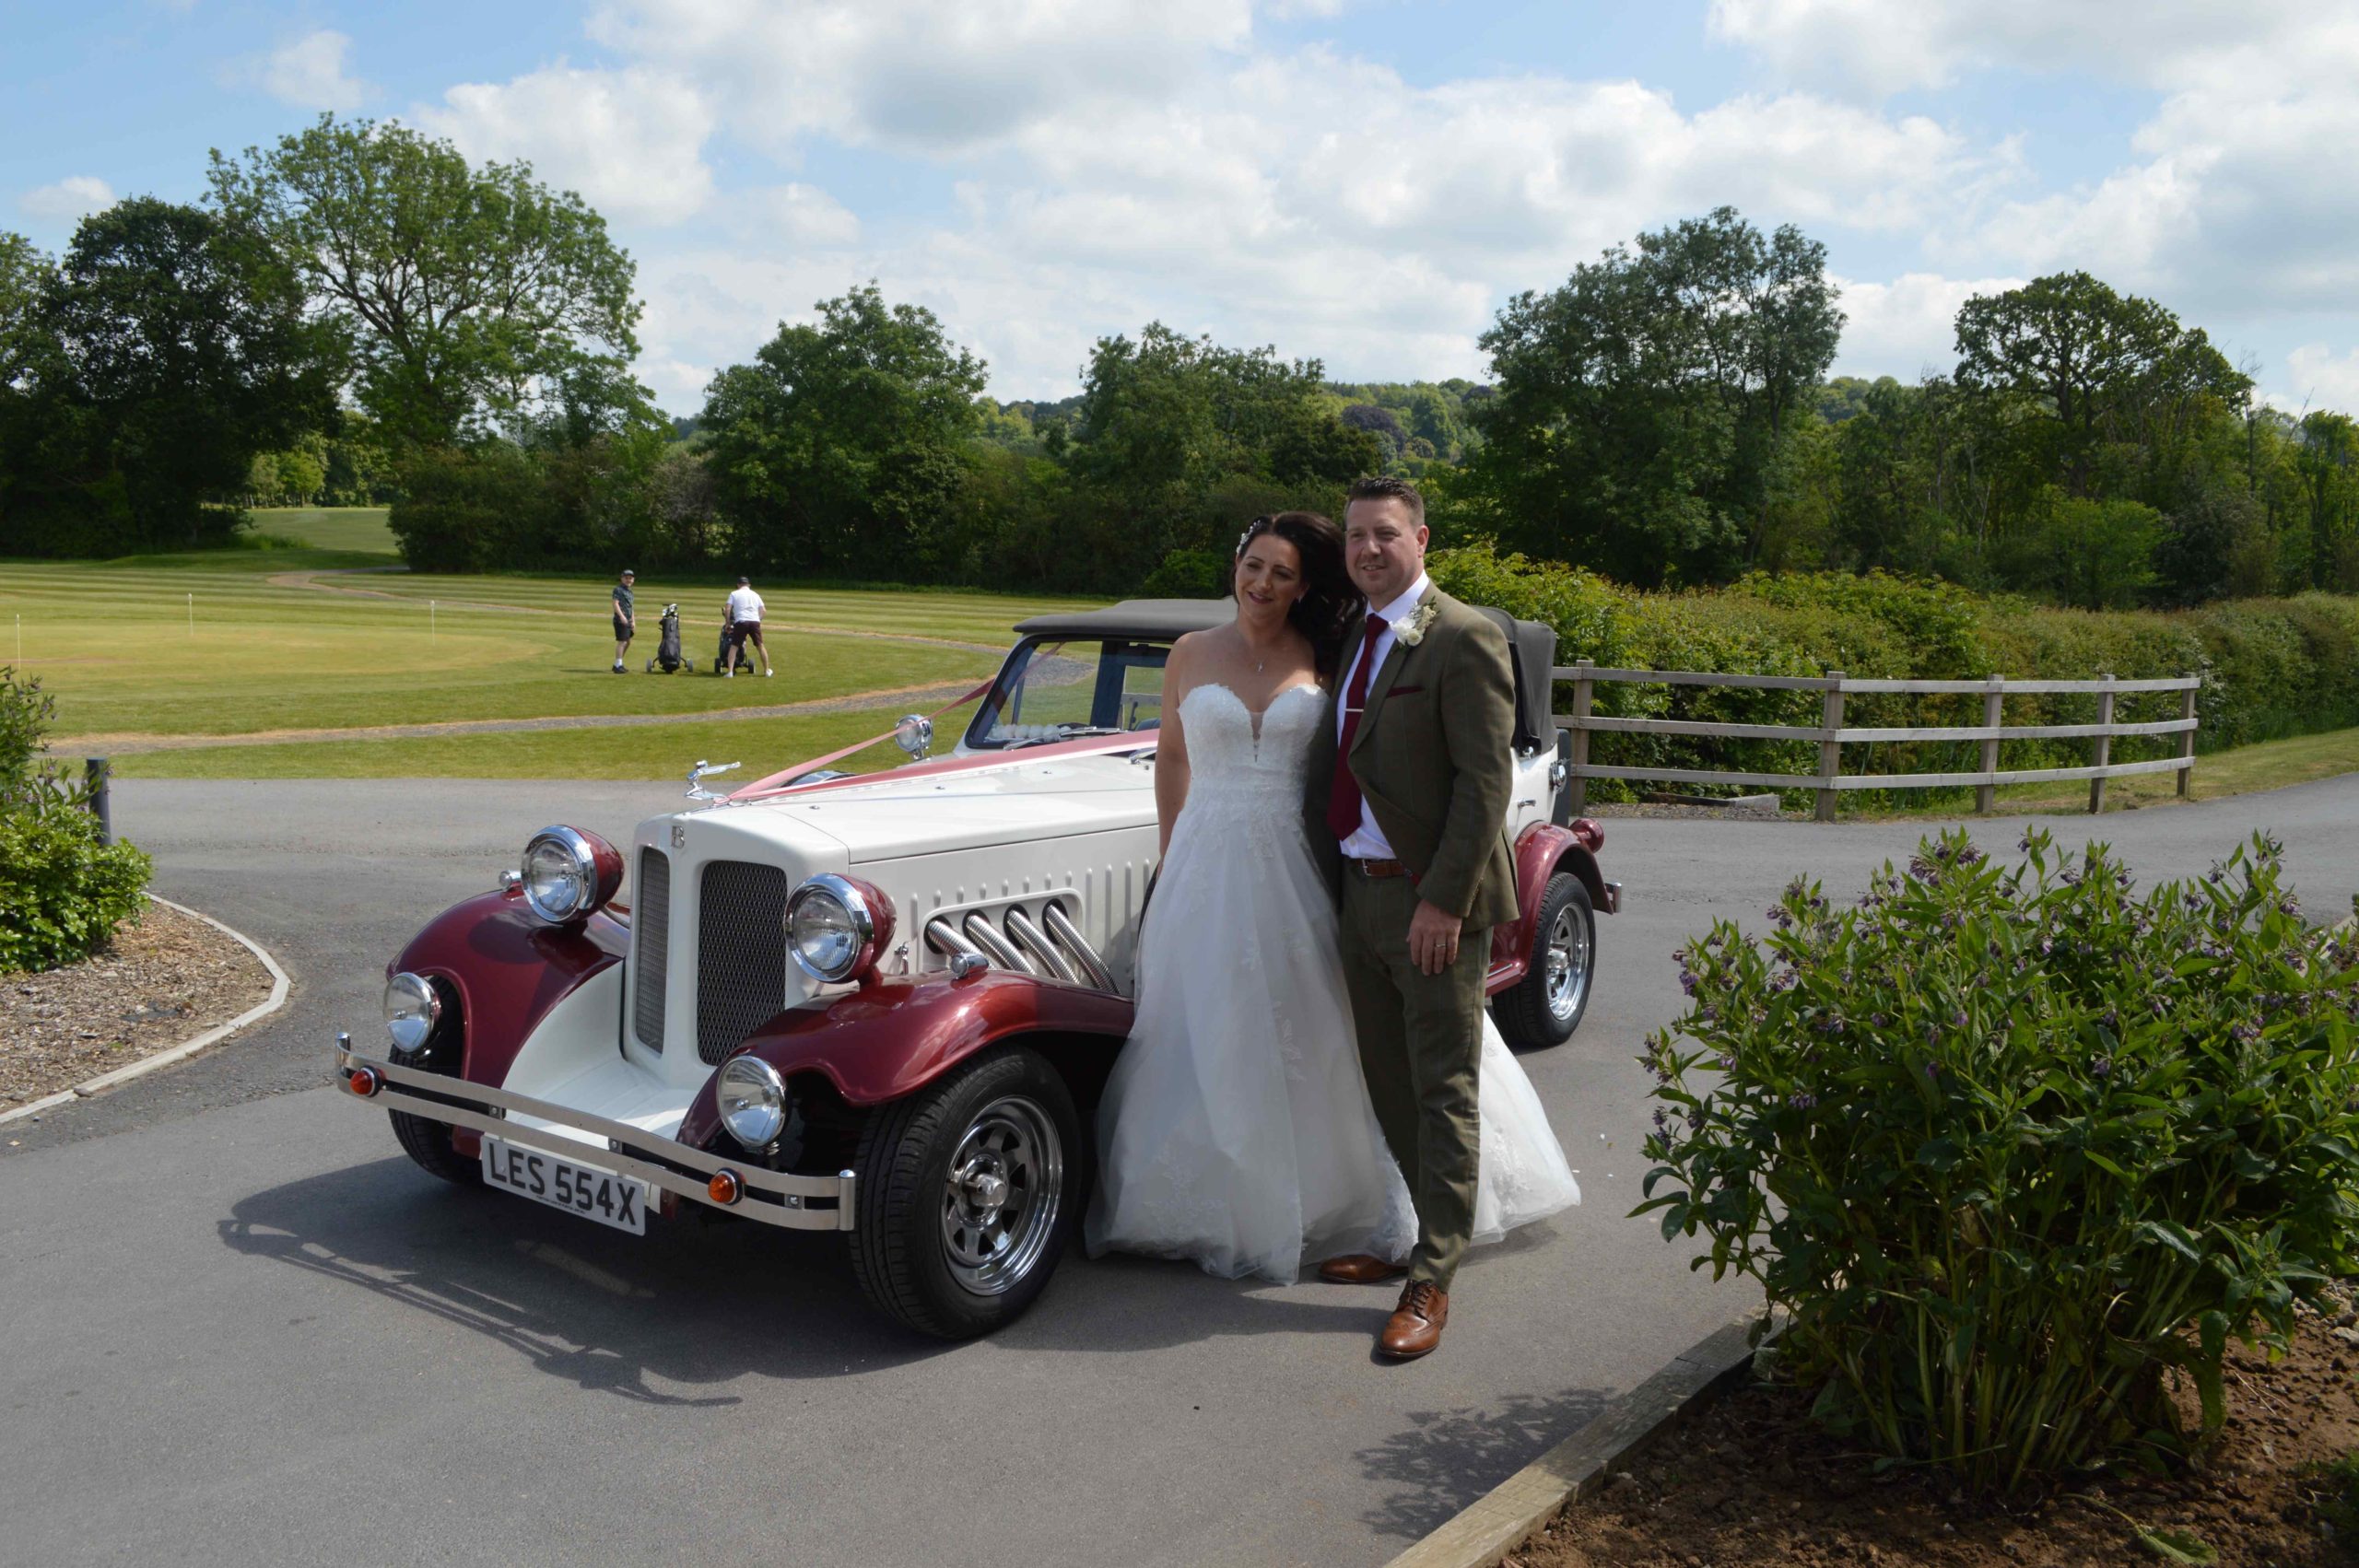 Bassett Down Golf Complex wedding reception for Charlotte and Philip